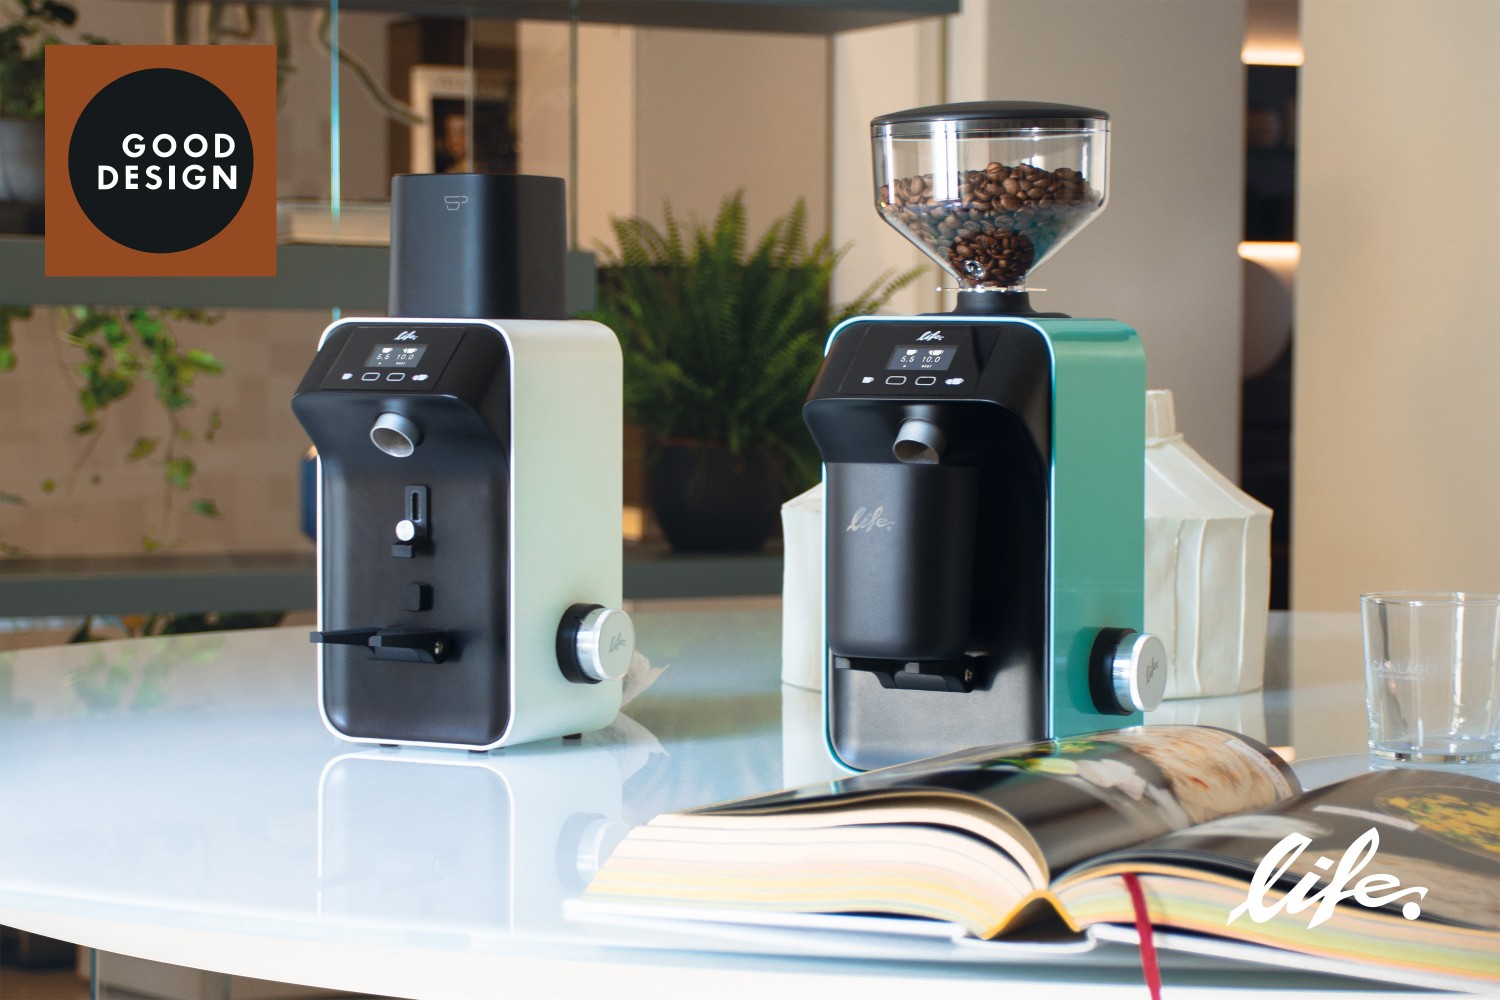 Life coffee grinder wins the Good Design Award!